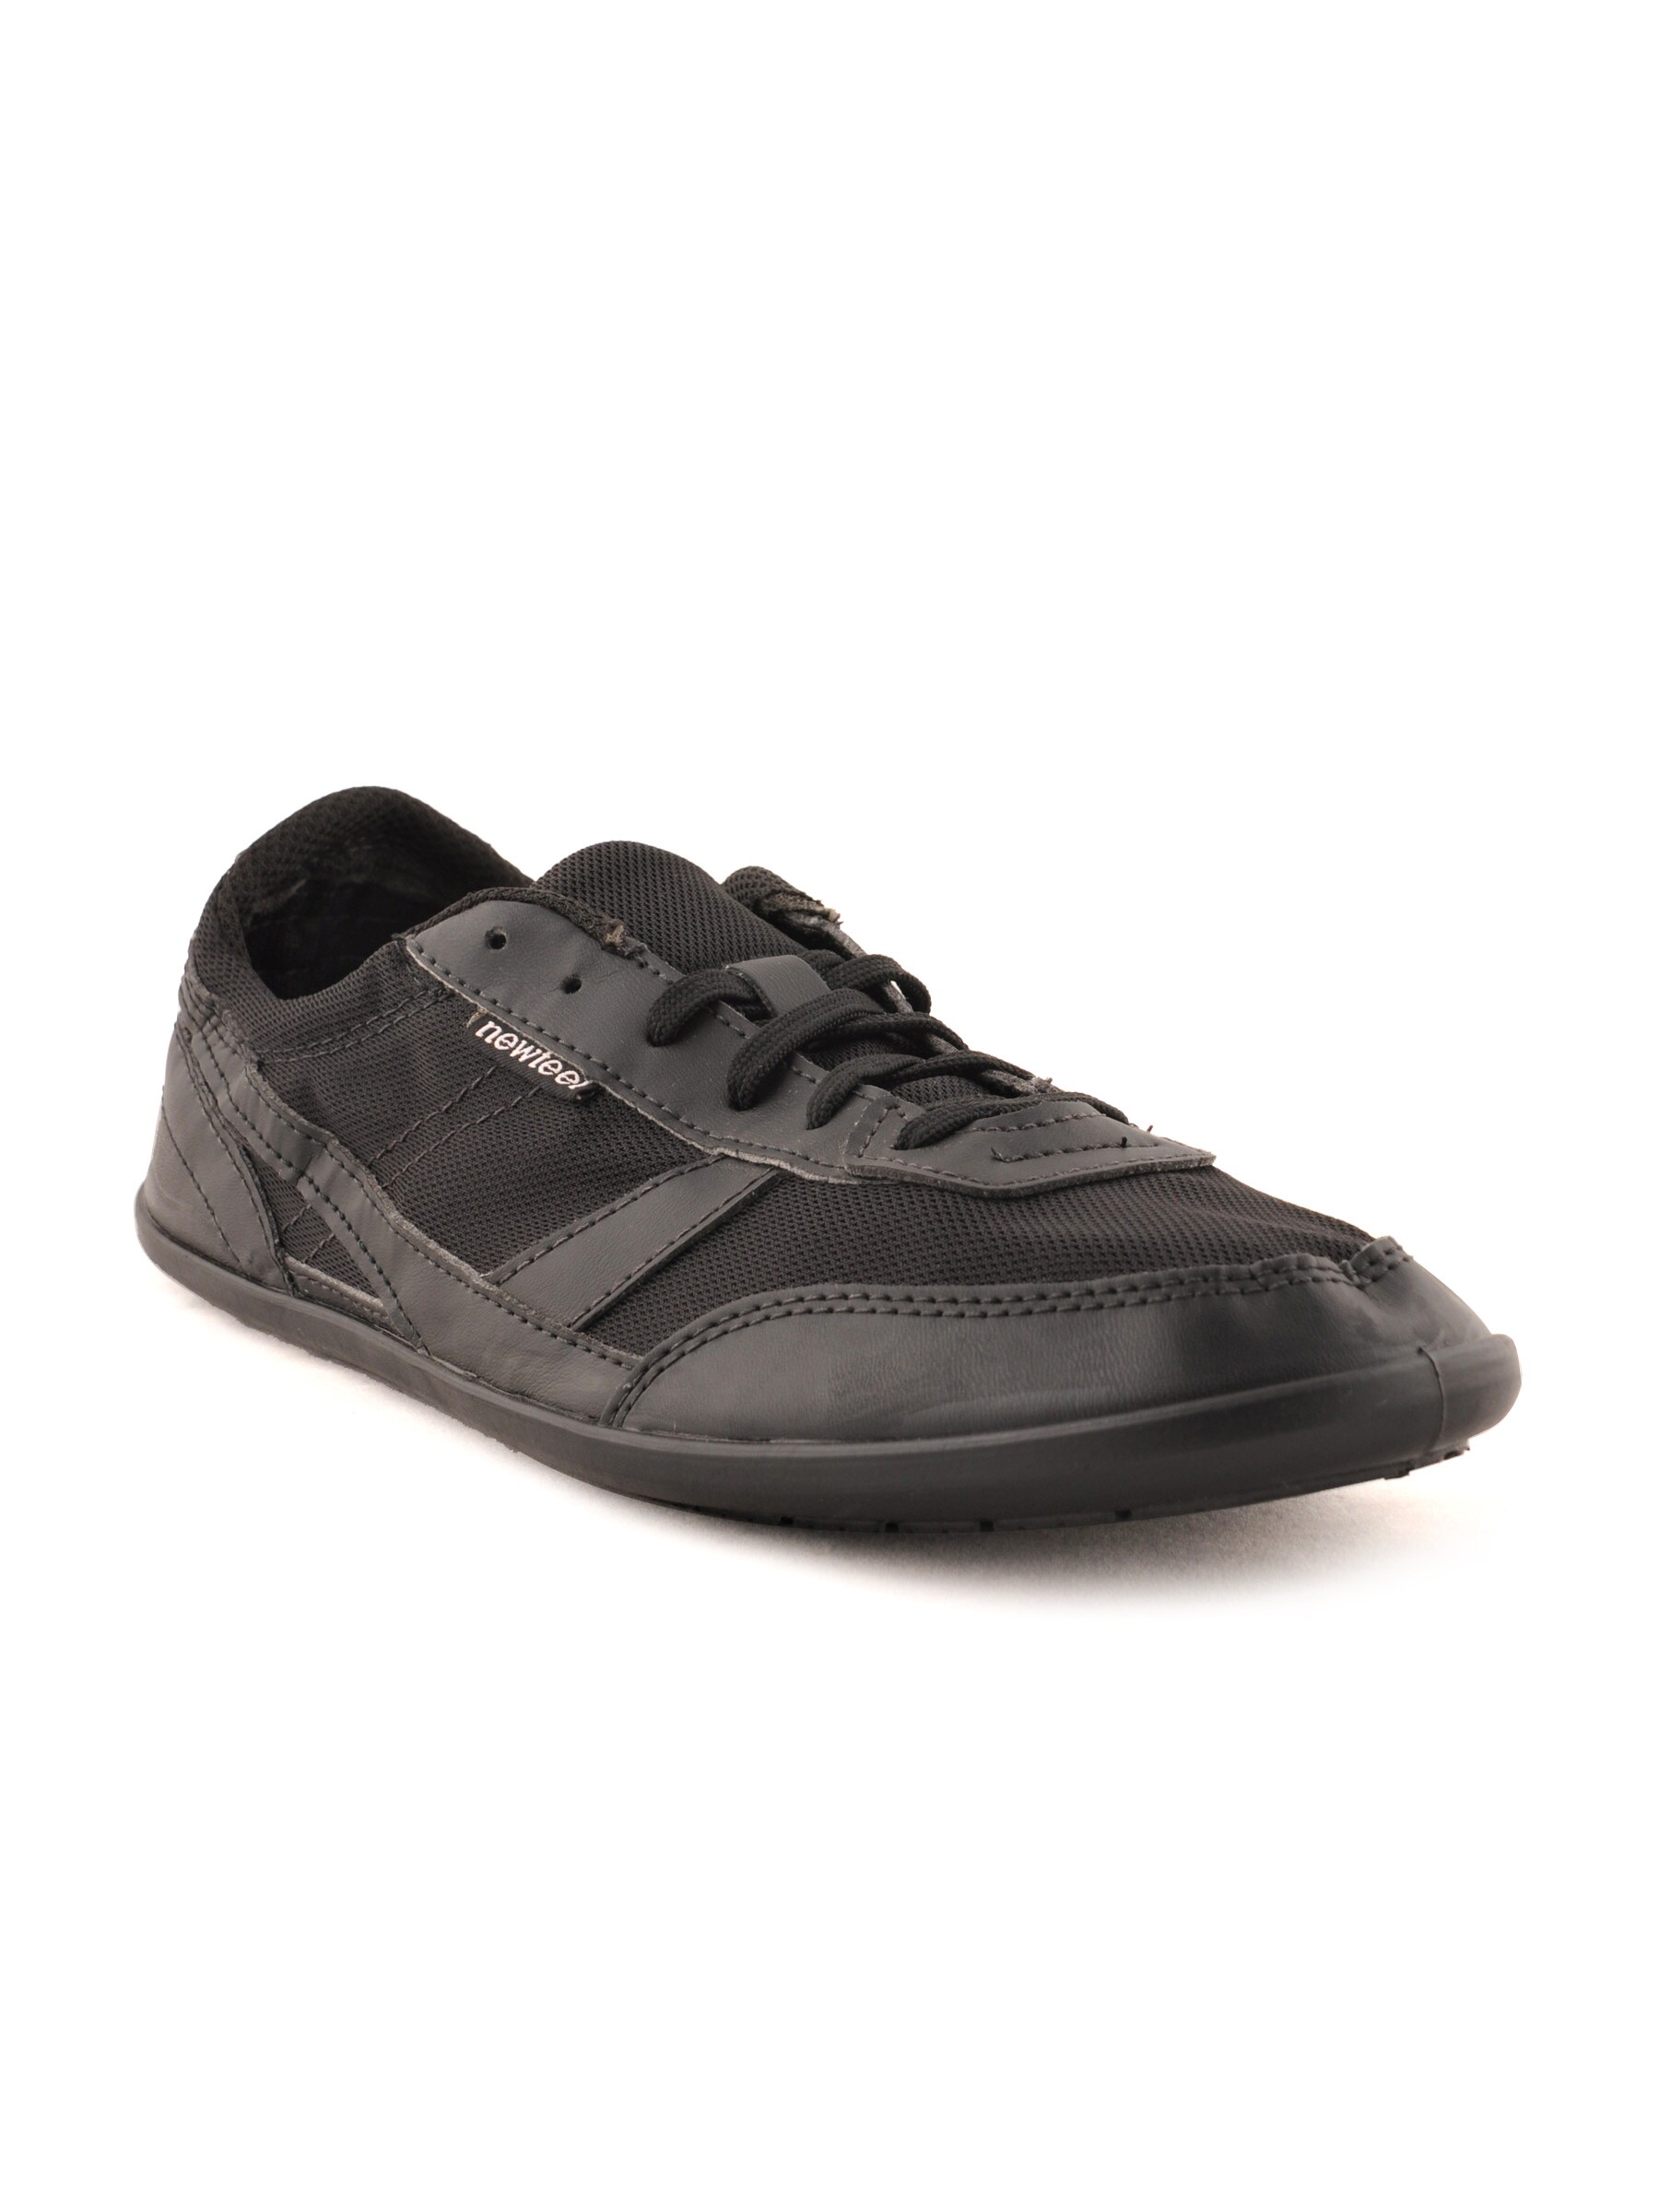 Newfeel Unisex Sports Black Sports Shoes